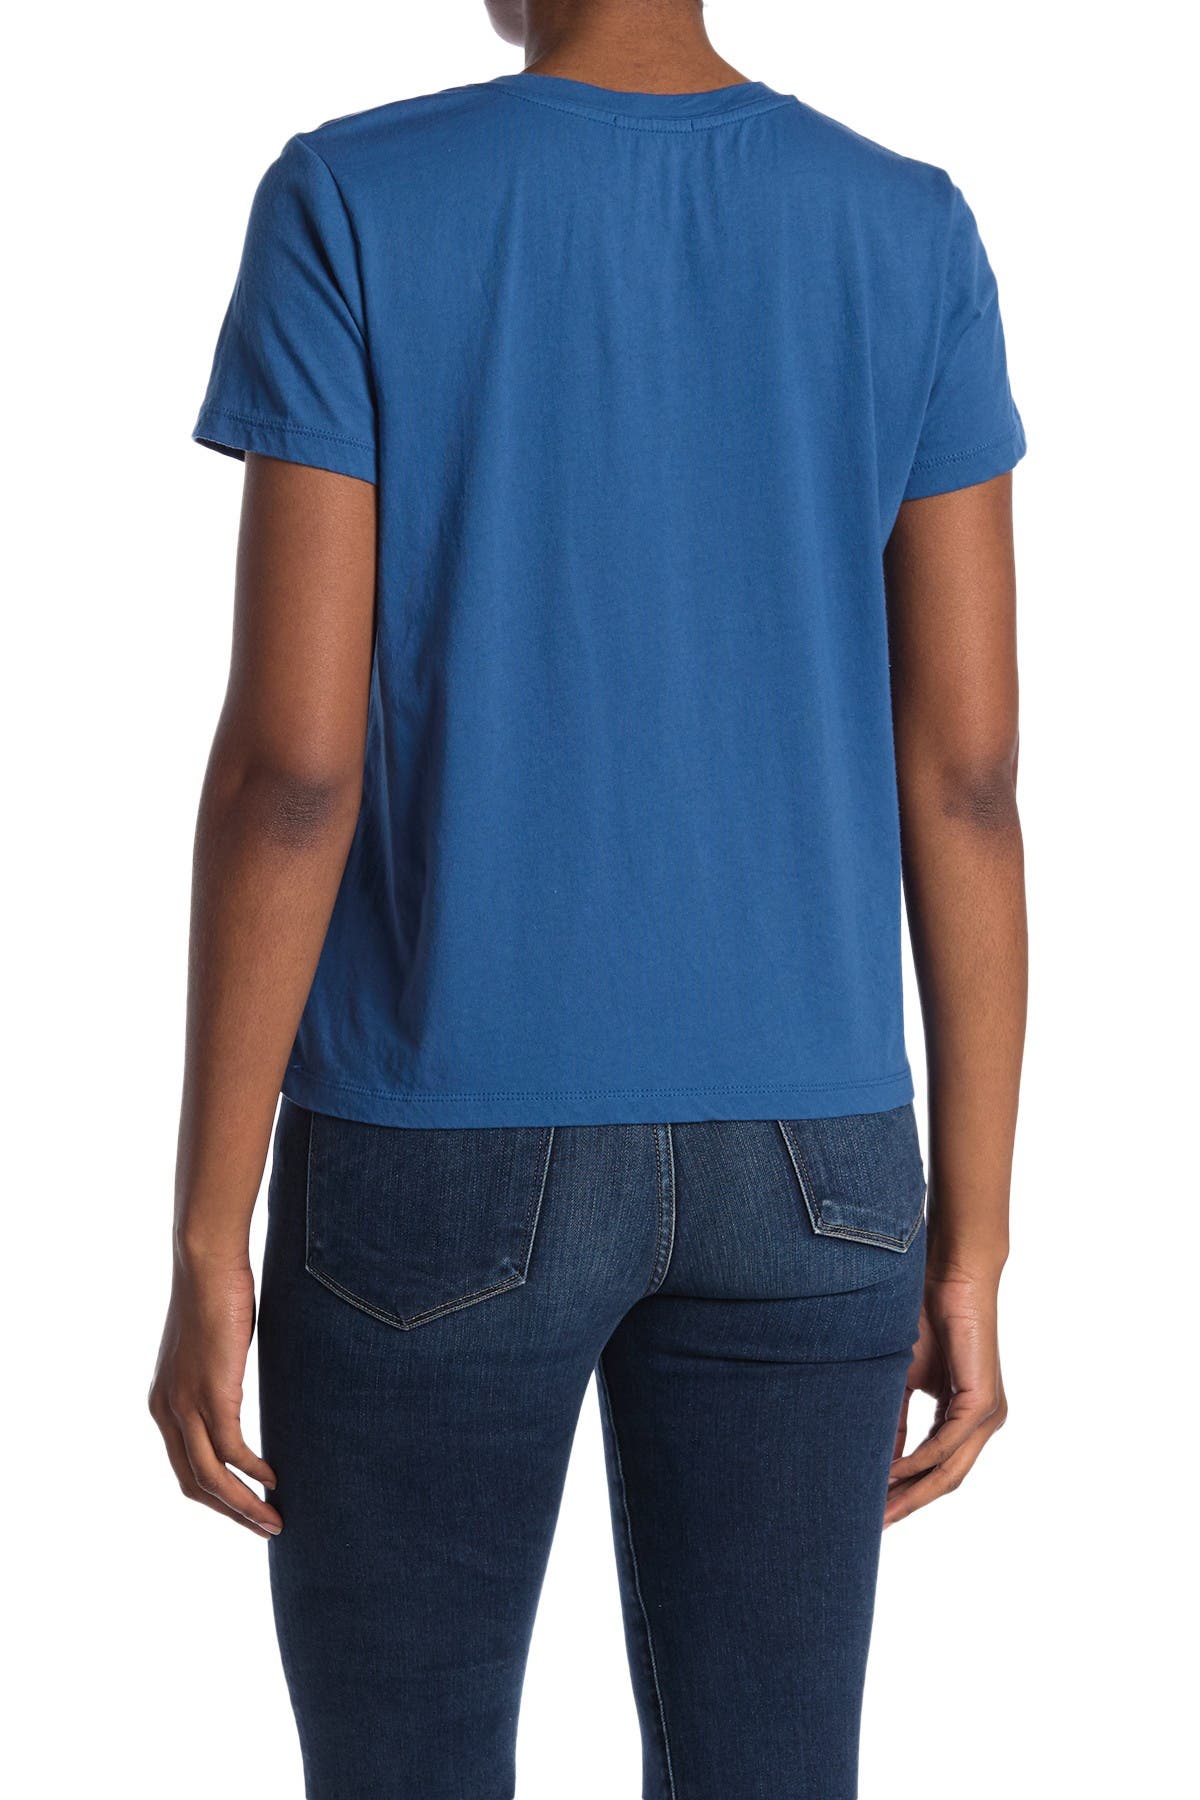 James Perse Vintage Little Boy T-shirt In Medium Blue1